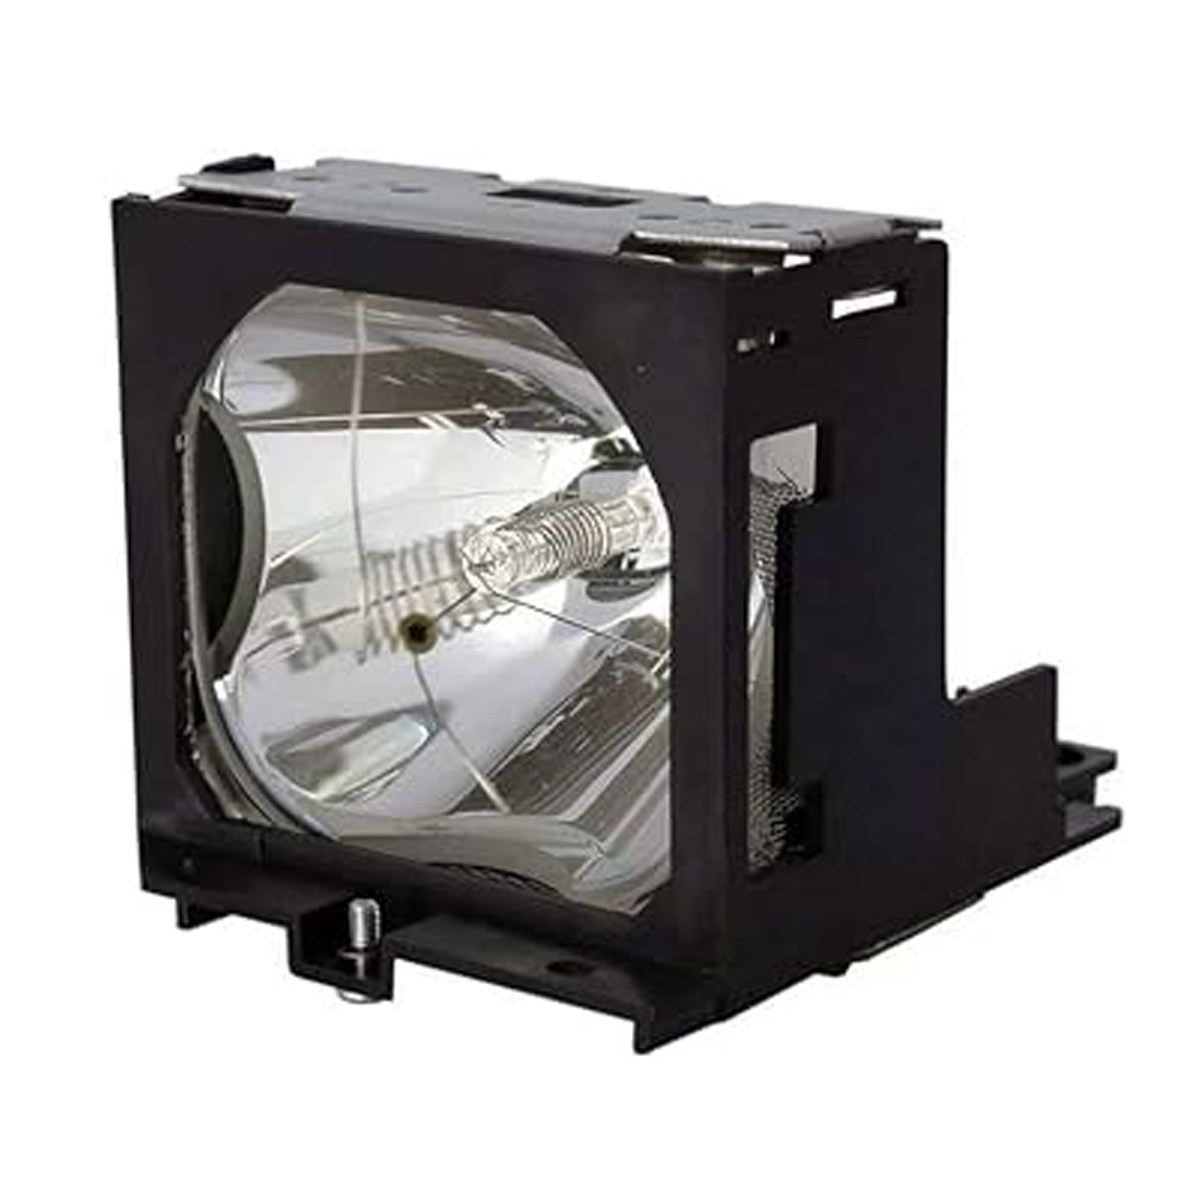 Replacement Projector lamp LMP-P202 For Sony VPL PS10 VPL PX10 VPL PX11 VPL PX15